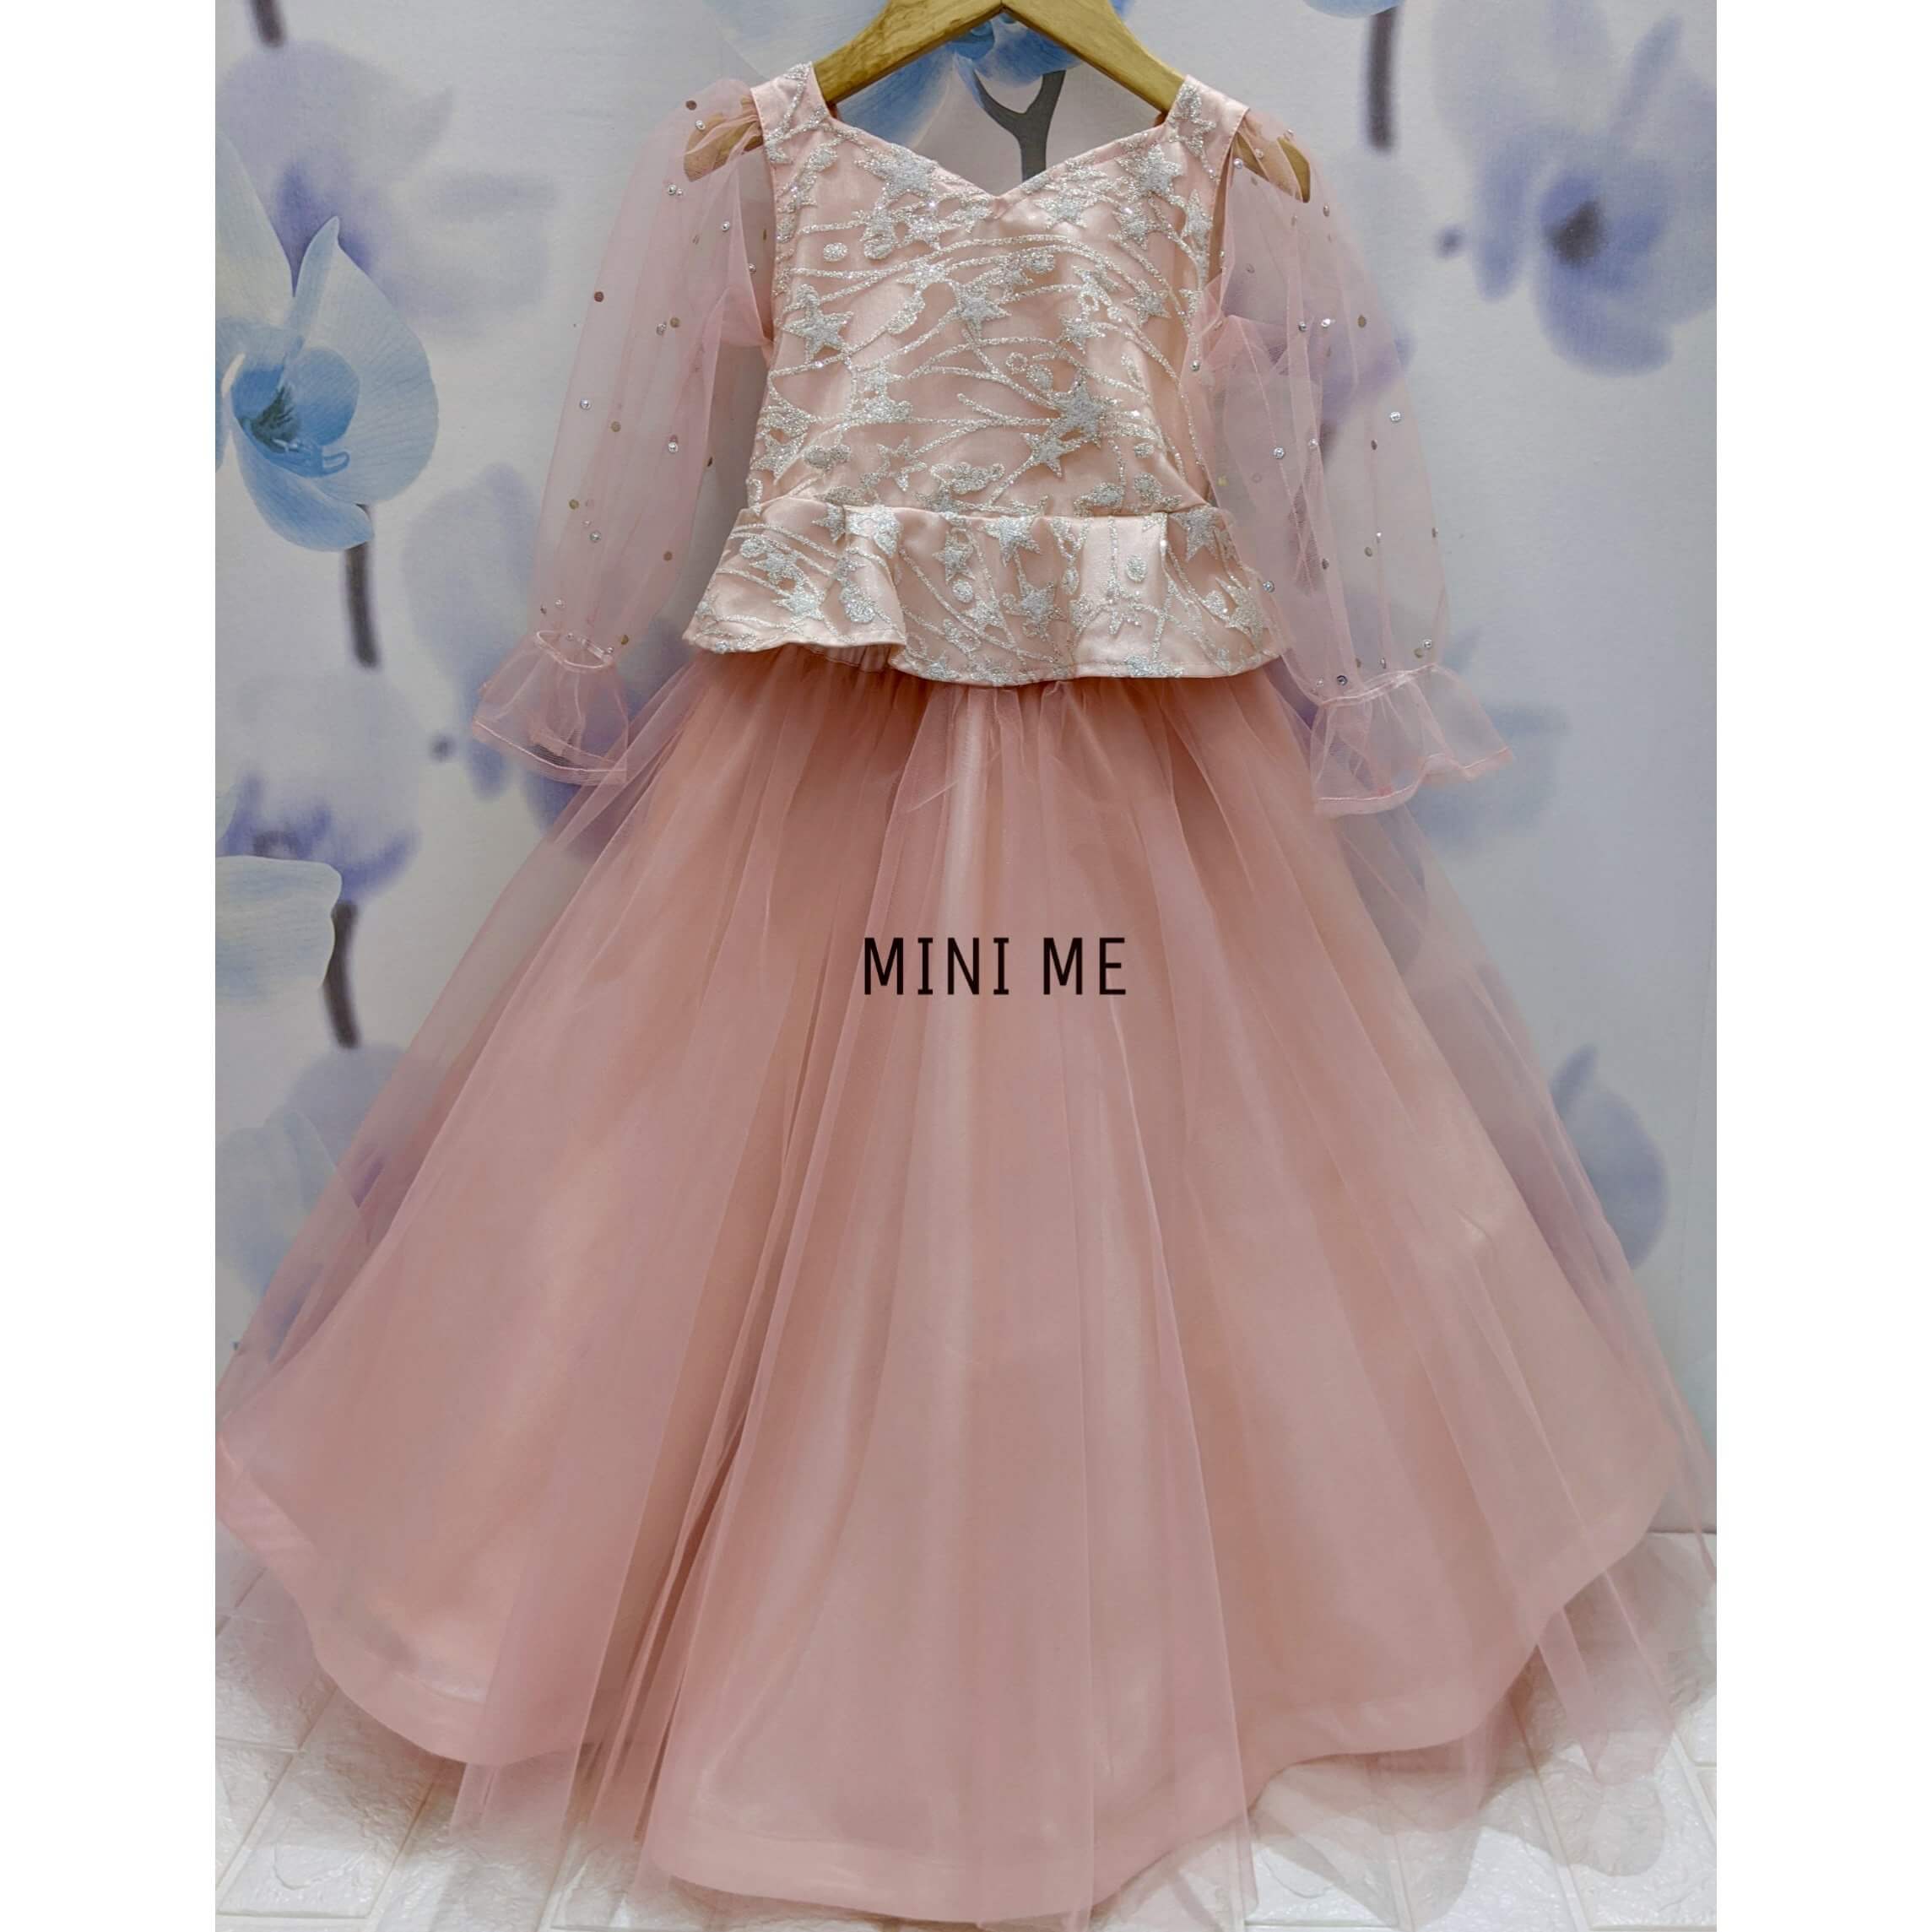 Peppa Pig Fairy Dress - Age 12-24 Months - 1 PC : Amscan International